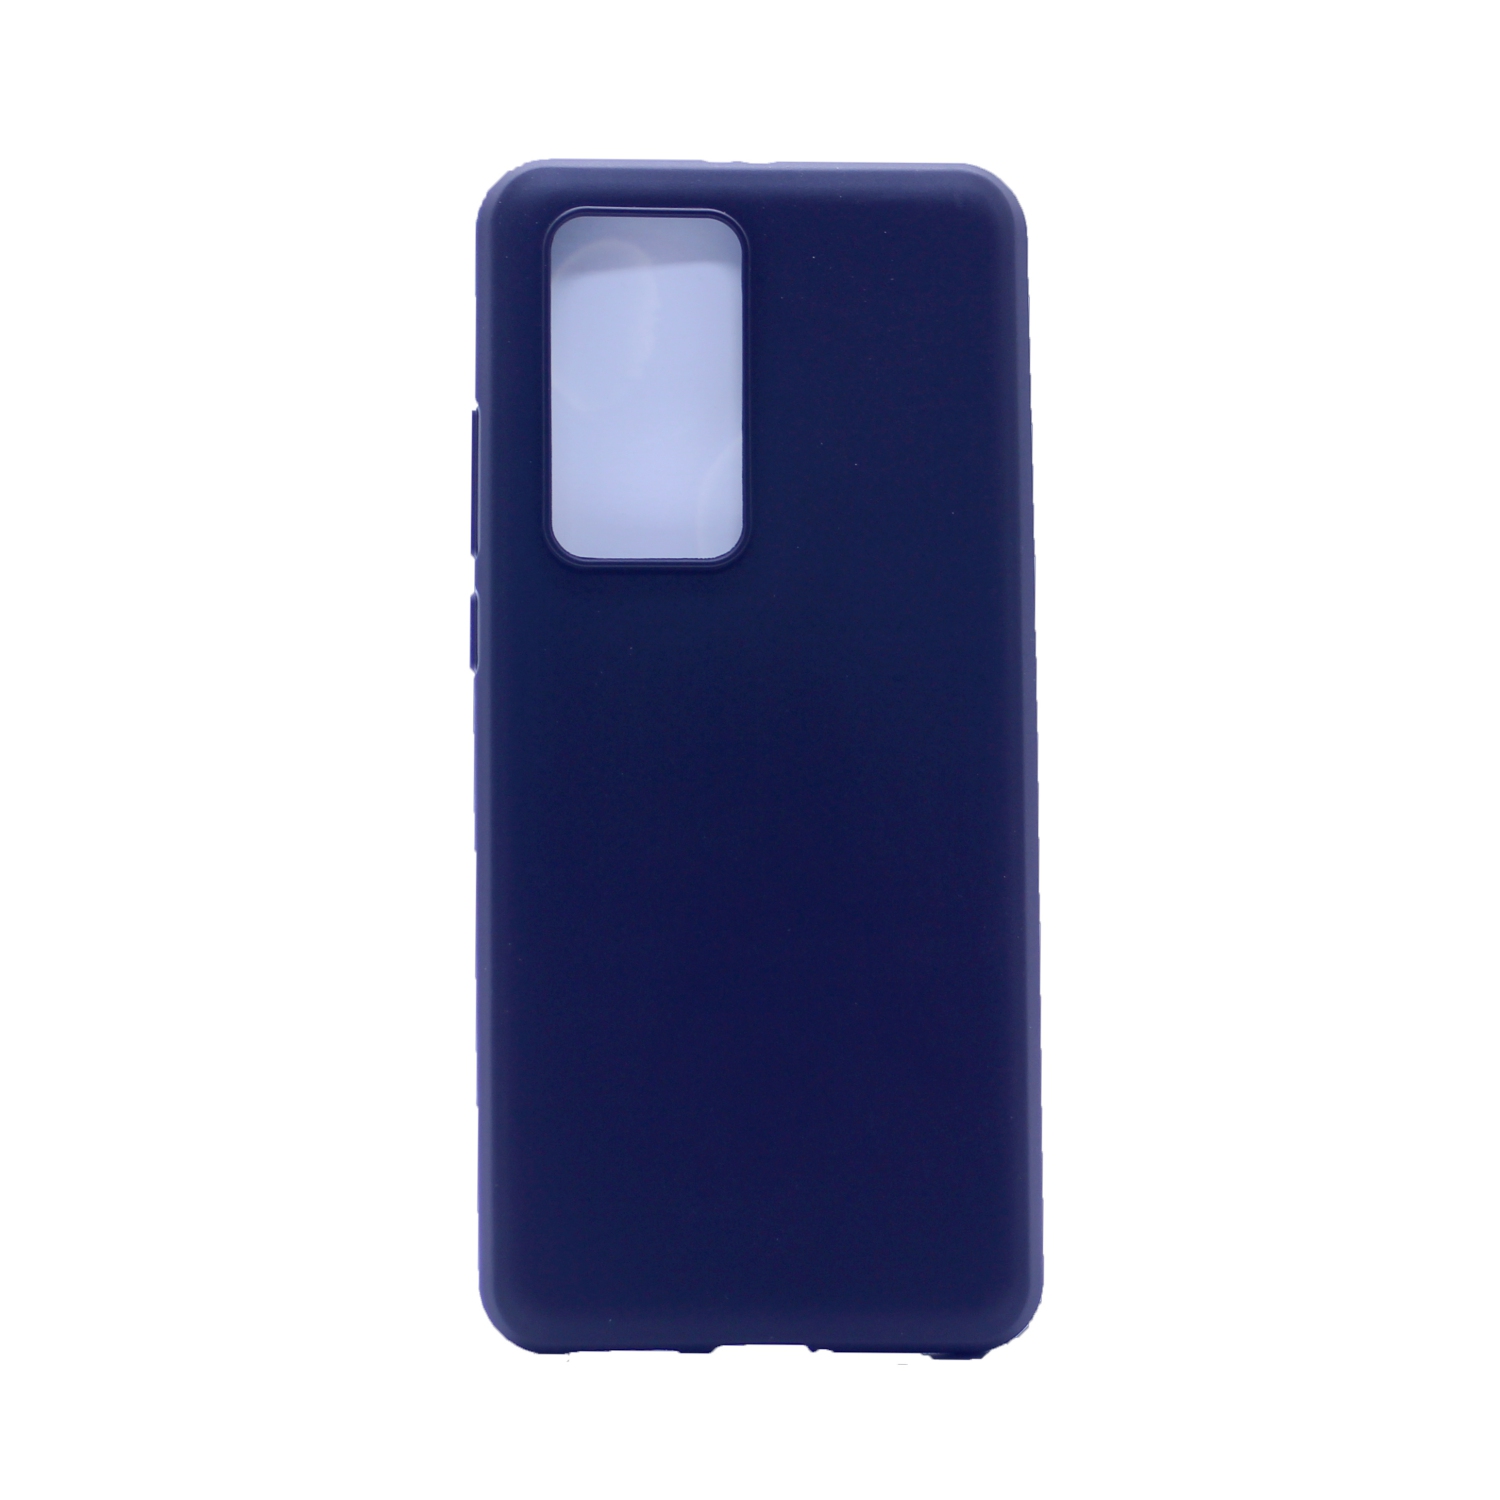 Back Matt, Glossy Bumper Soft TPU Case For Huawei P40 Pro(2020), Black